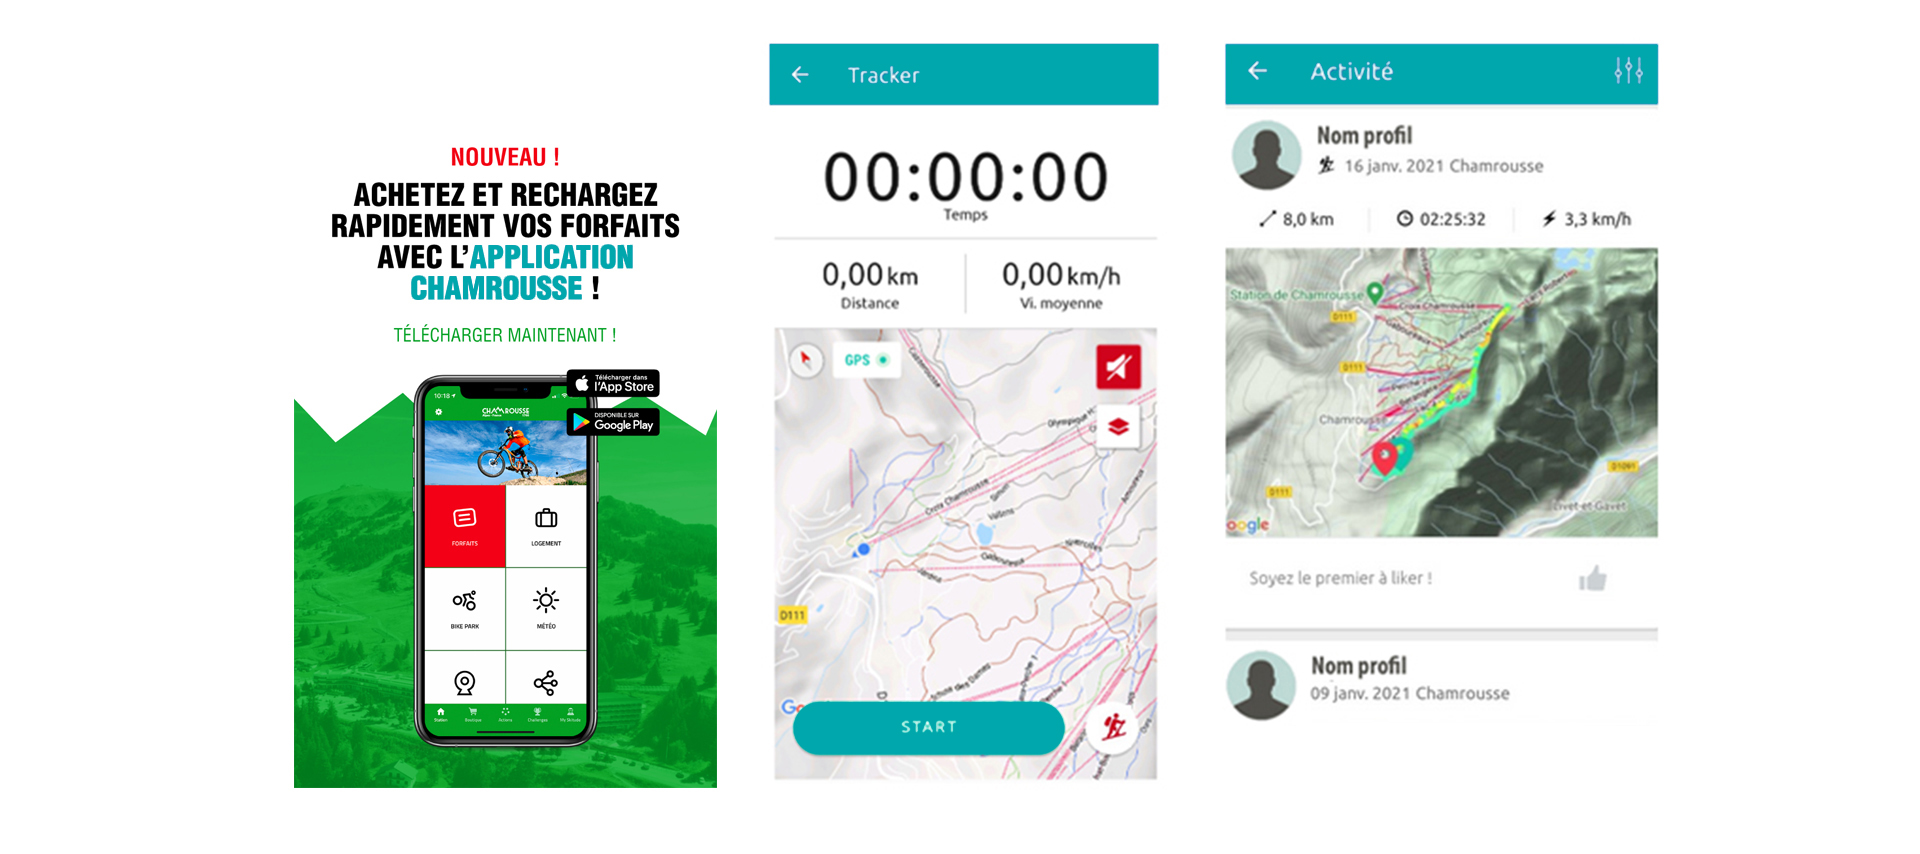 Chamrousse application mobile enregistrement activité station ski montagne grenoble lyon isère alpes france - © Chamrousse - Skitude